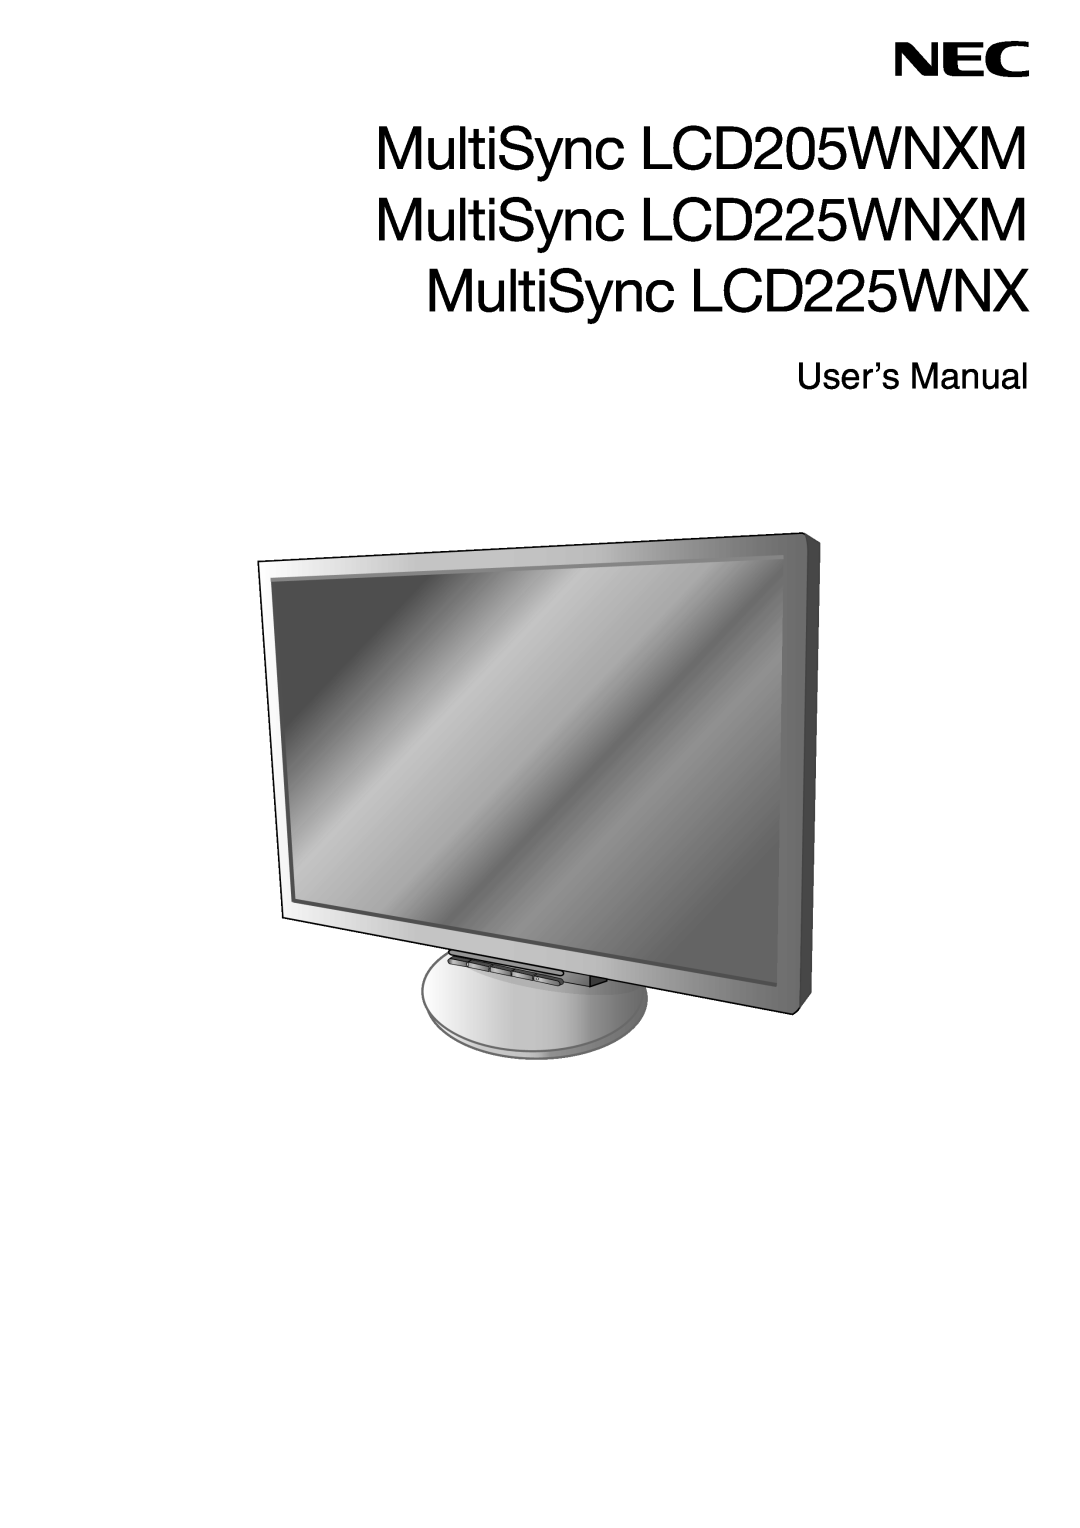 NEC user manual MultiSync LCD205WNXM MultiSync LCD225WNXM, UserÕs Manual 